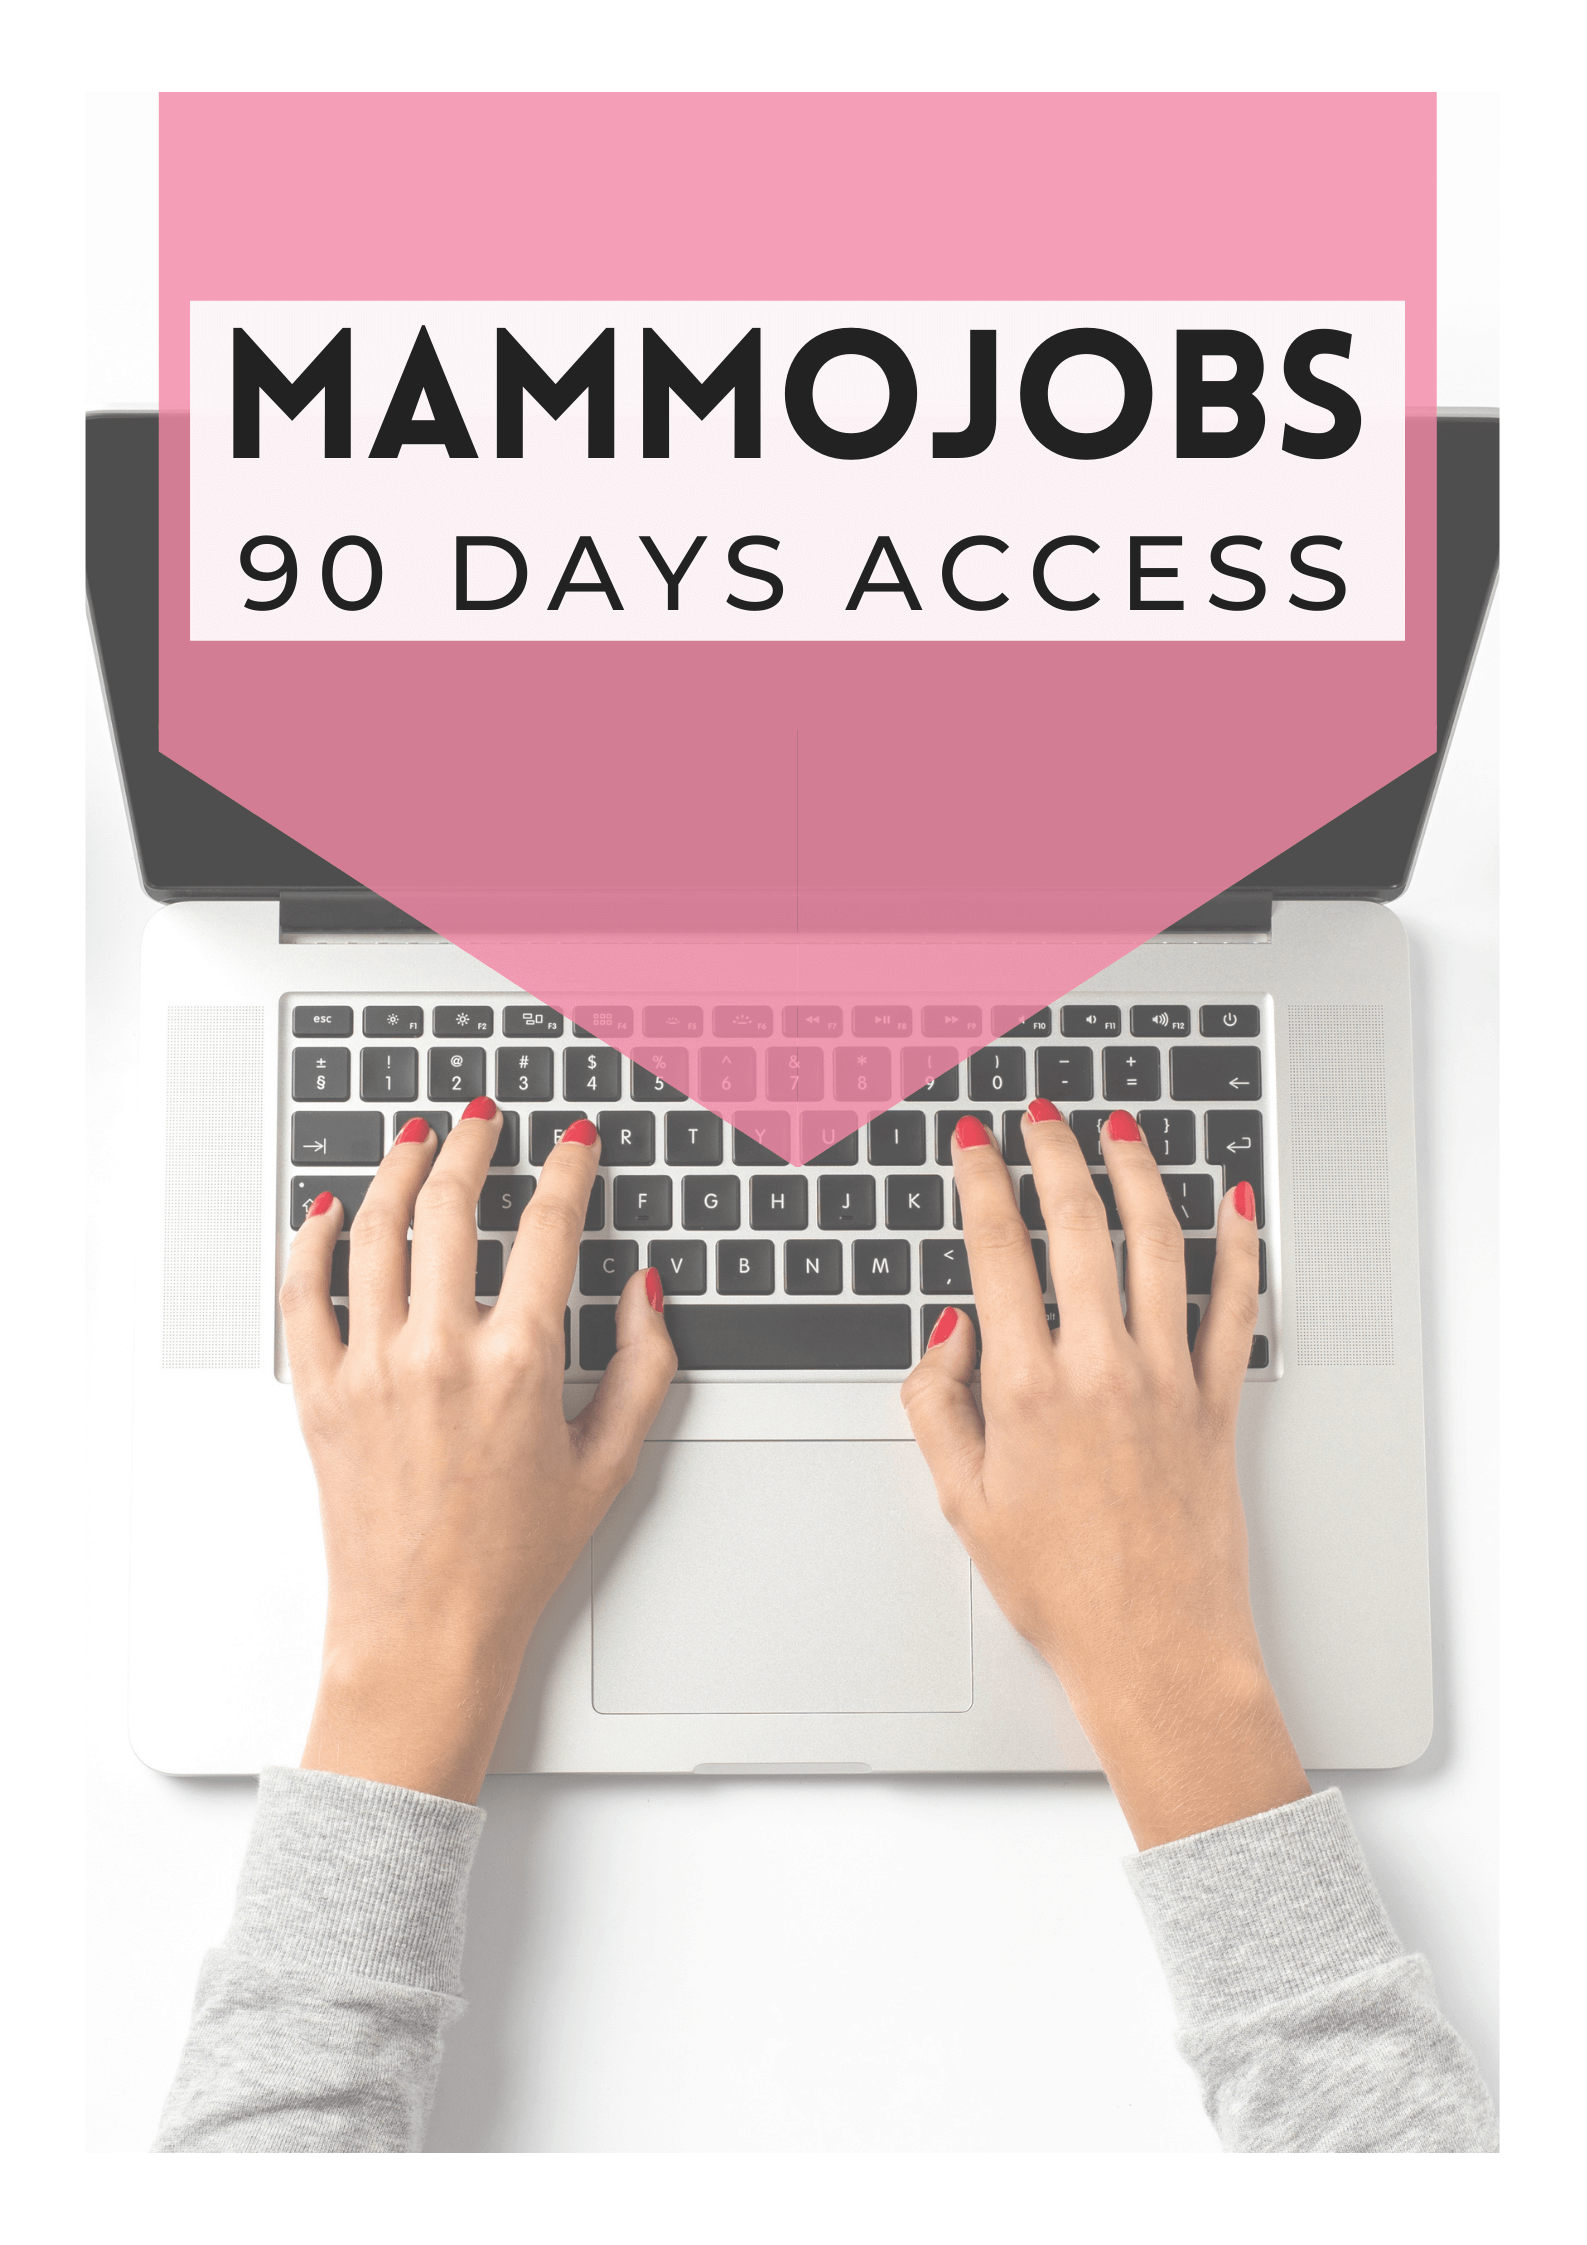 MammoJobs Employer Access - 90 Days